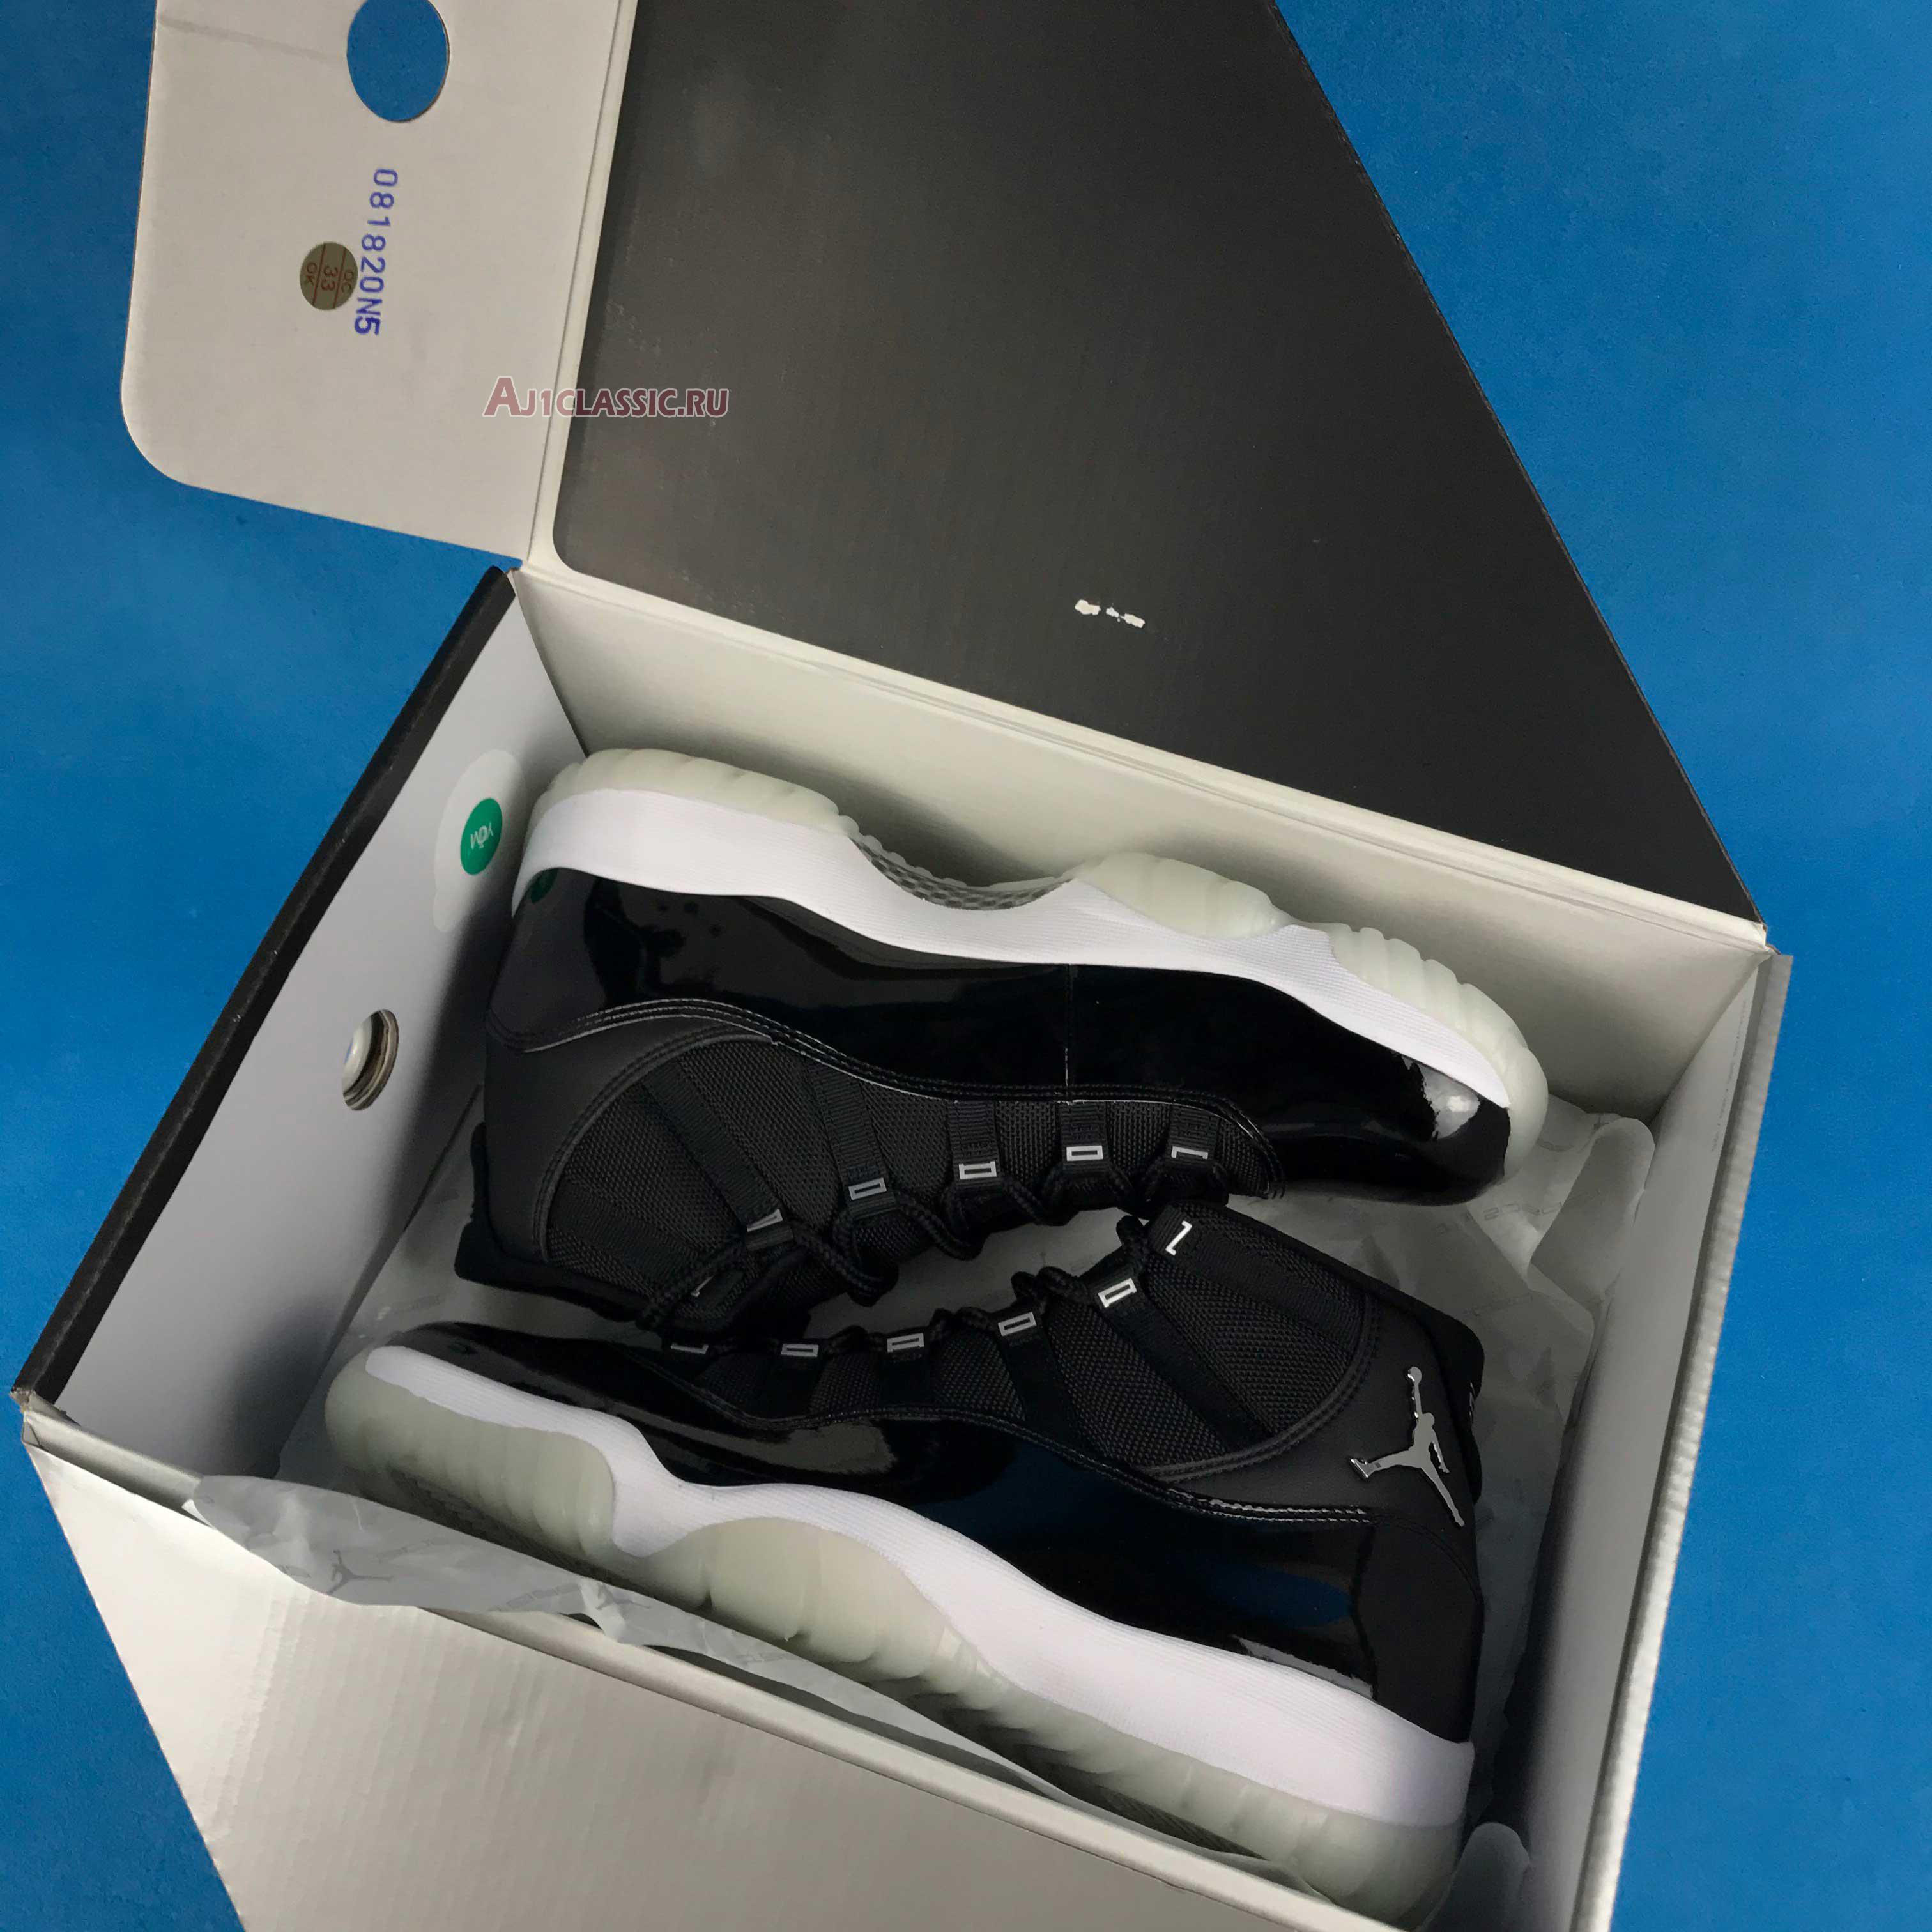 Air Jordan 11 Retro 25th Anniversary CT8012-011-2 Black/Clear-White-Metallic Silver Sneakers